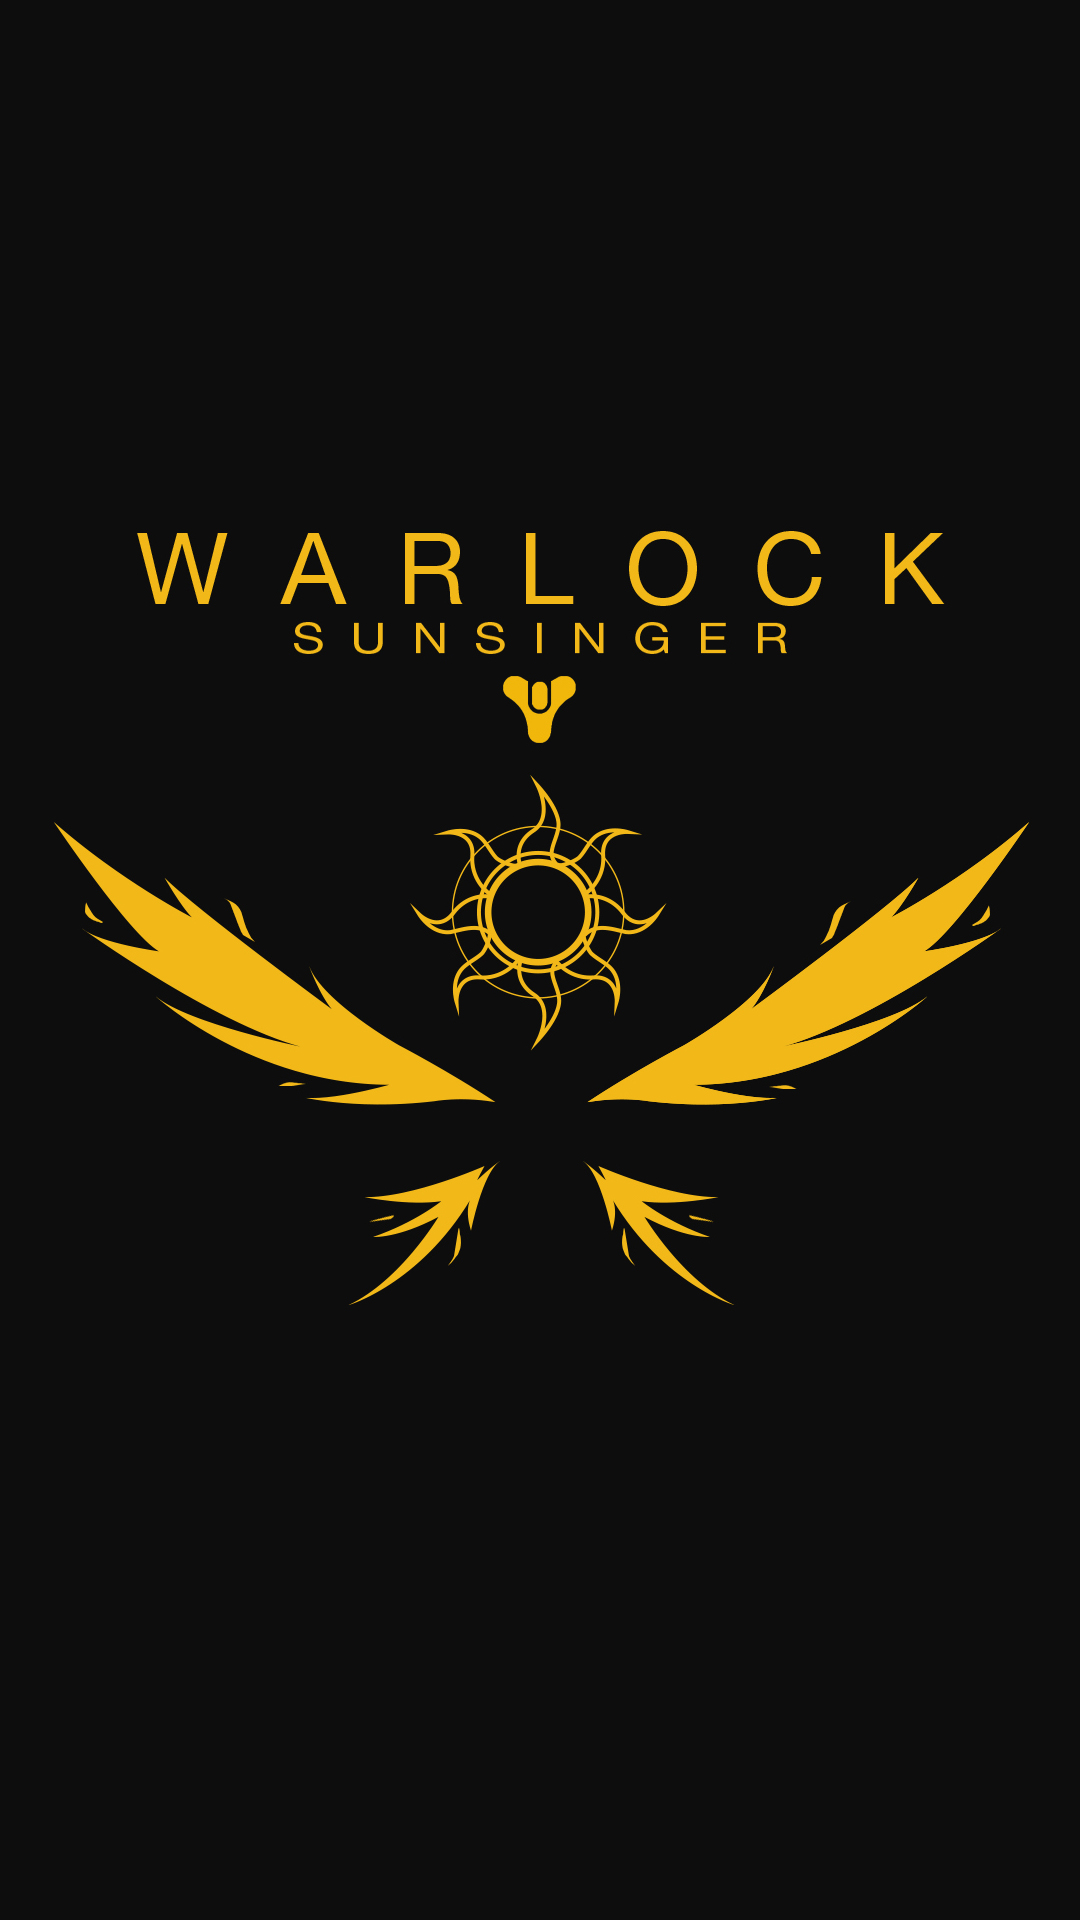 Destiny Warlock Sunsinger